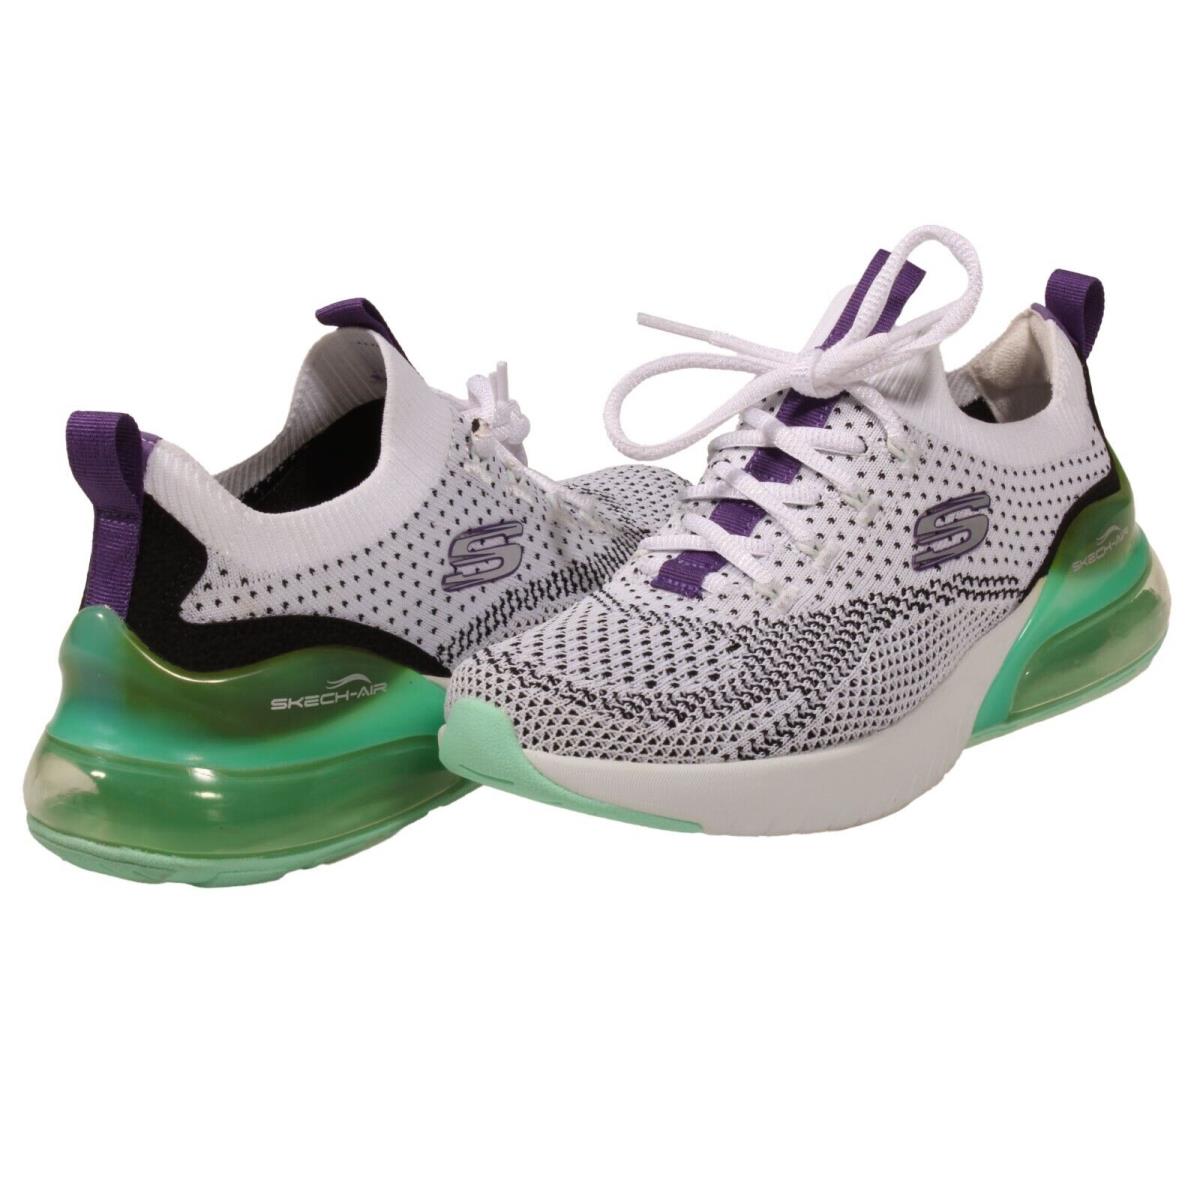 Skechers Skech-air Stratus Womens Sneaker White / Turquoise / Purple US Size 7.5 - Multicolor